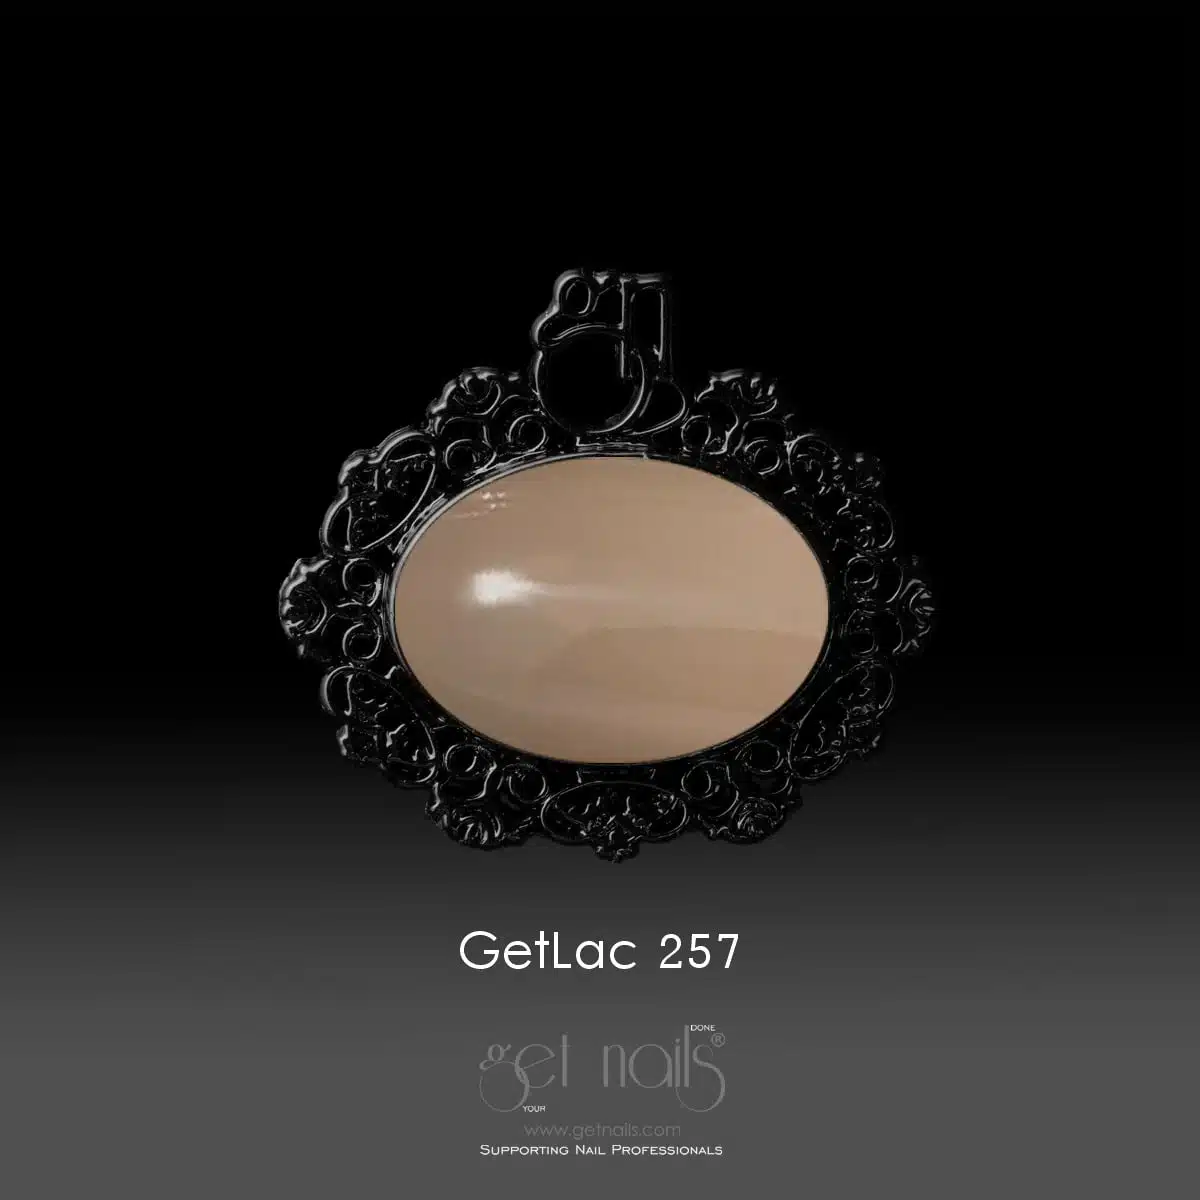 Get Nails Austria - GetLac 257 15 g